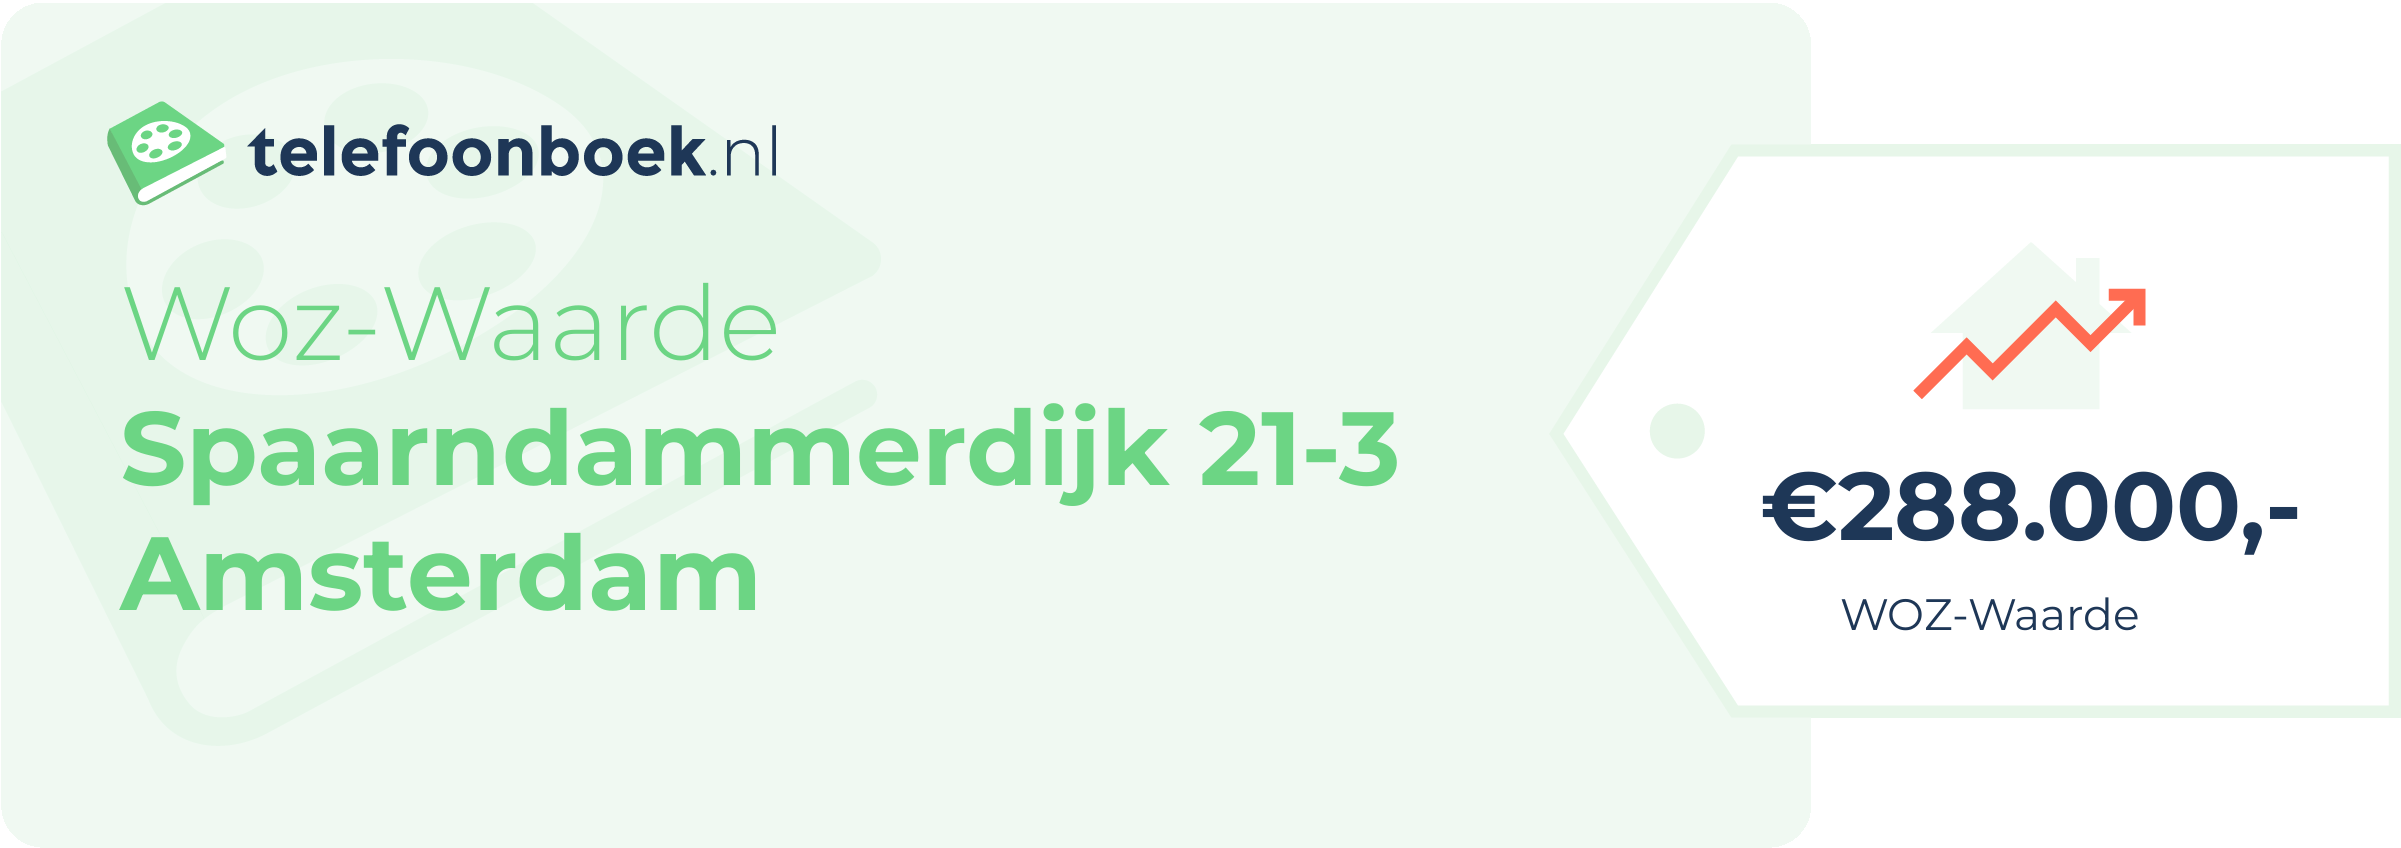 WOZ-waarde Spaarndammerdijk 21-3 Amsterdam